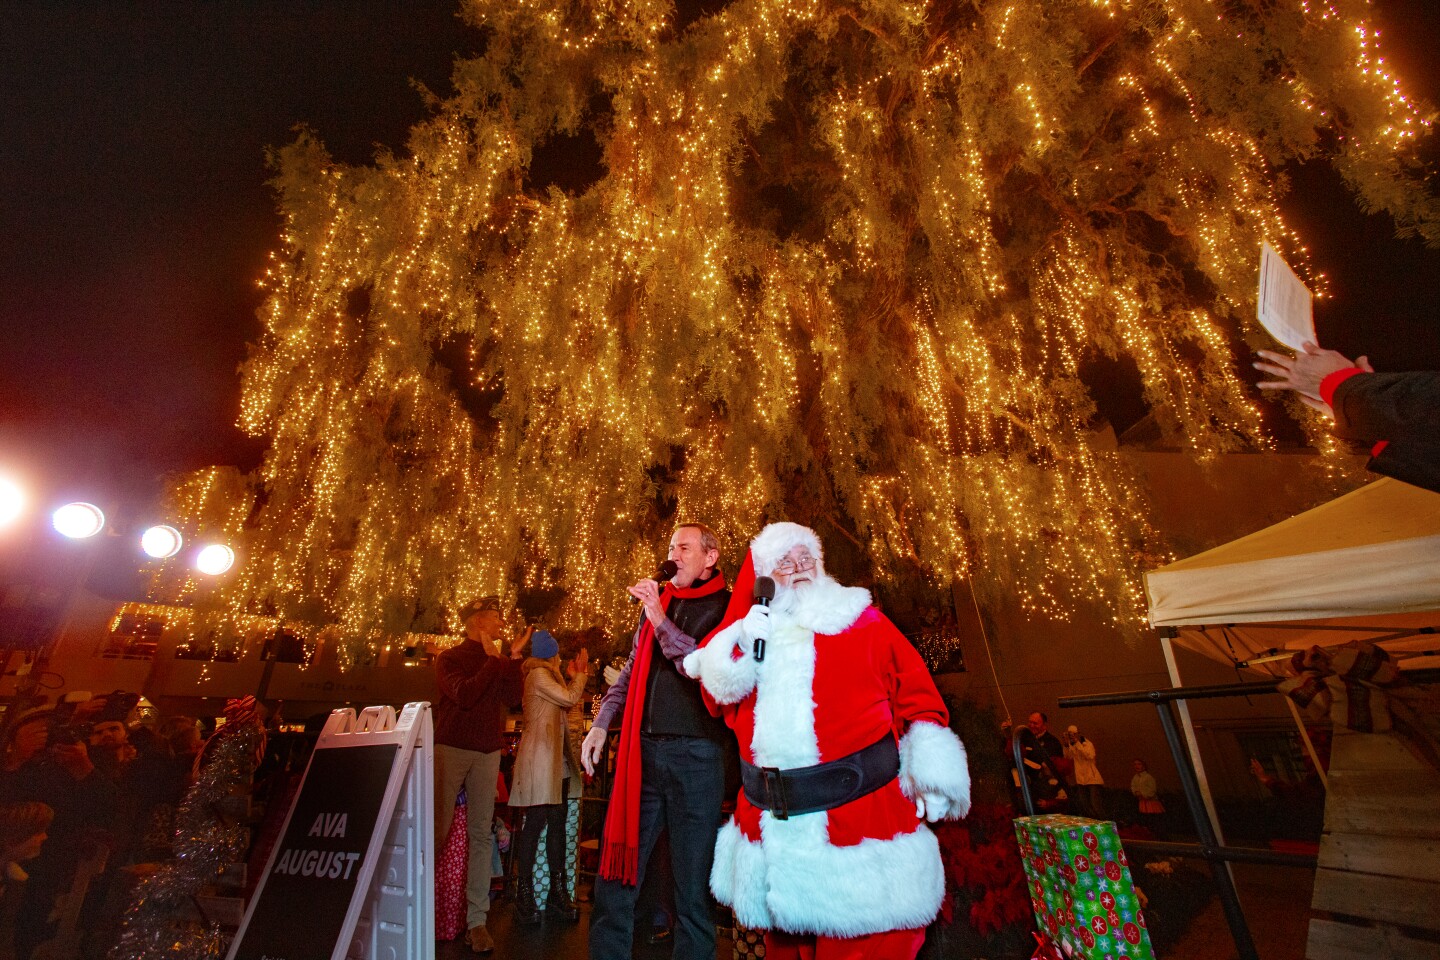 Laguna Beach Mayor Bob Whalen joins Santa in lighting the city's Christmas tree. (Photo by Spencer Grant)